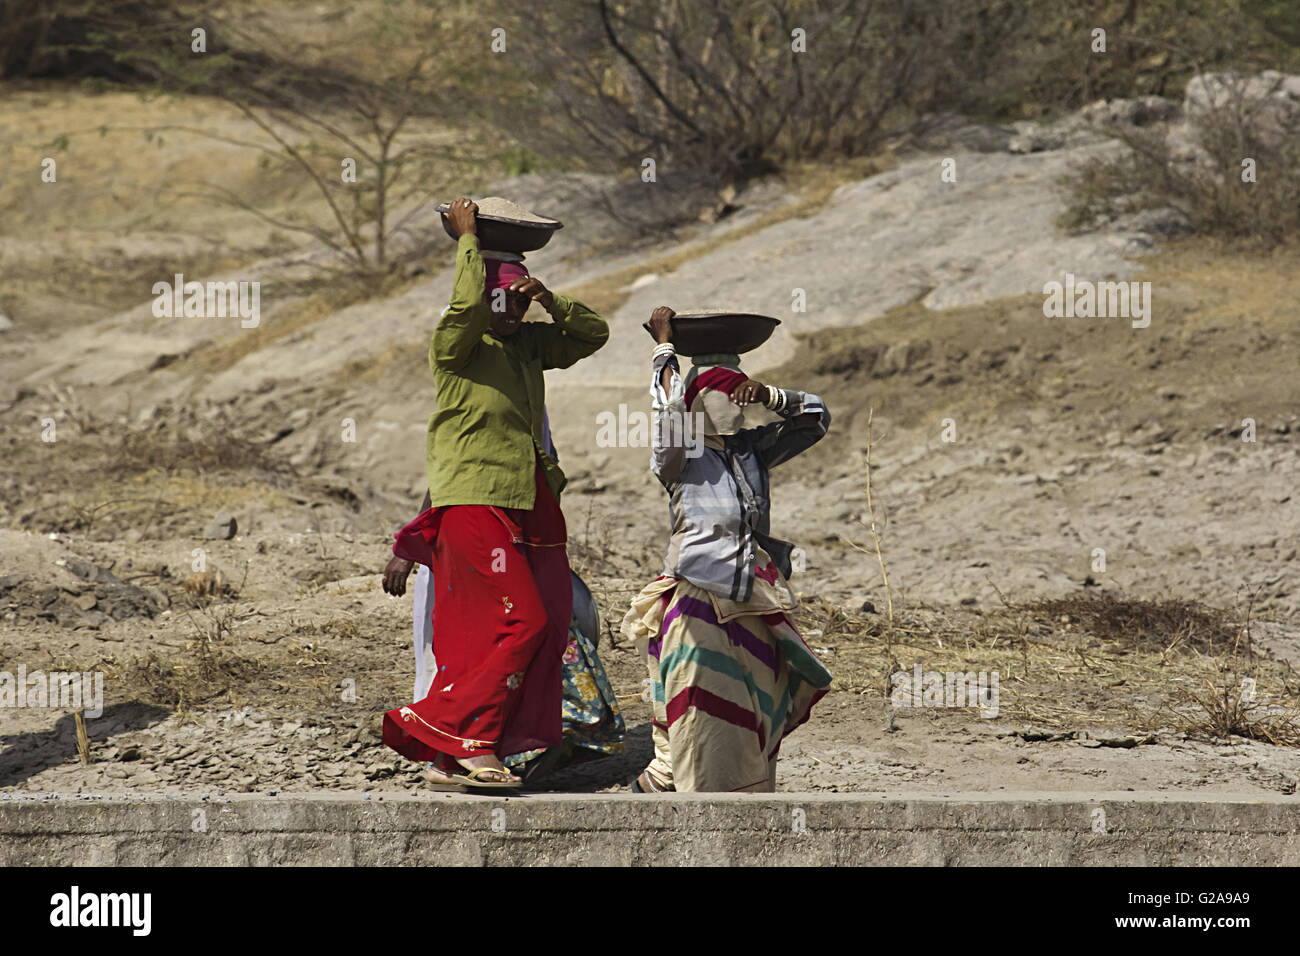 Les femmes traditionnelles ouvriers, bera, Rajasthan, Inde Banque D'Images